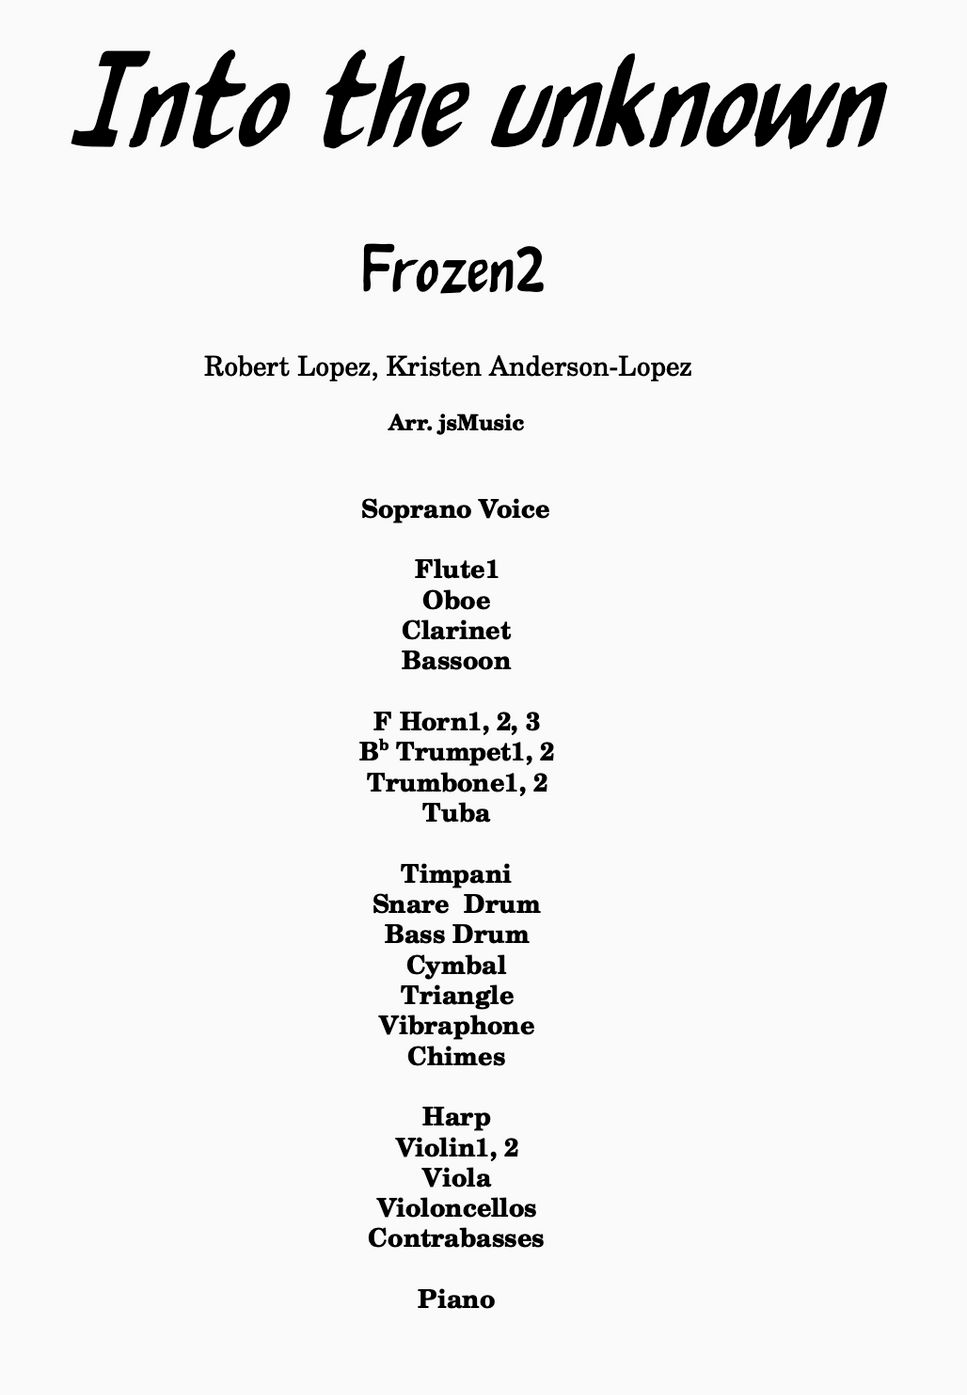 Frozen2 - Into the unknown (오케스트라총보 및 파트보) by jsMusic